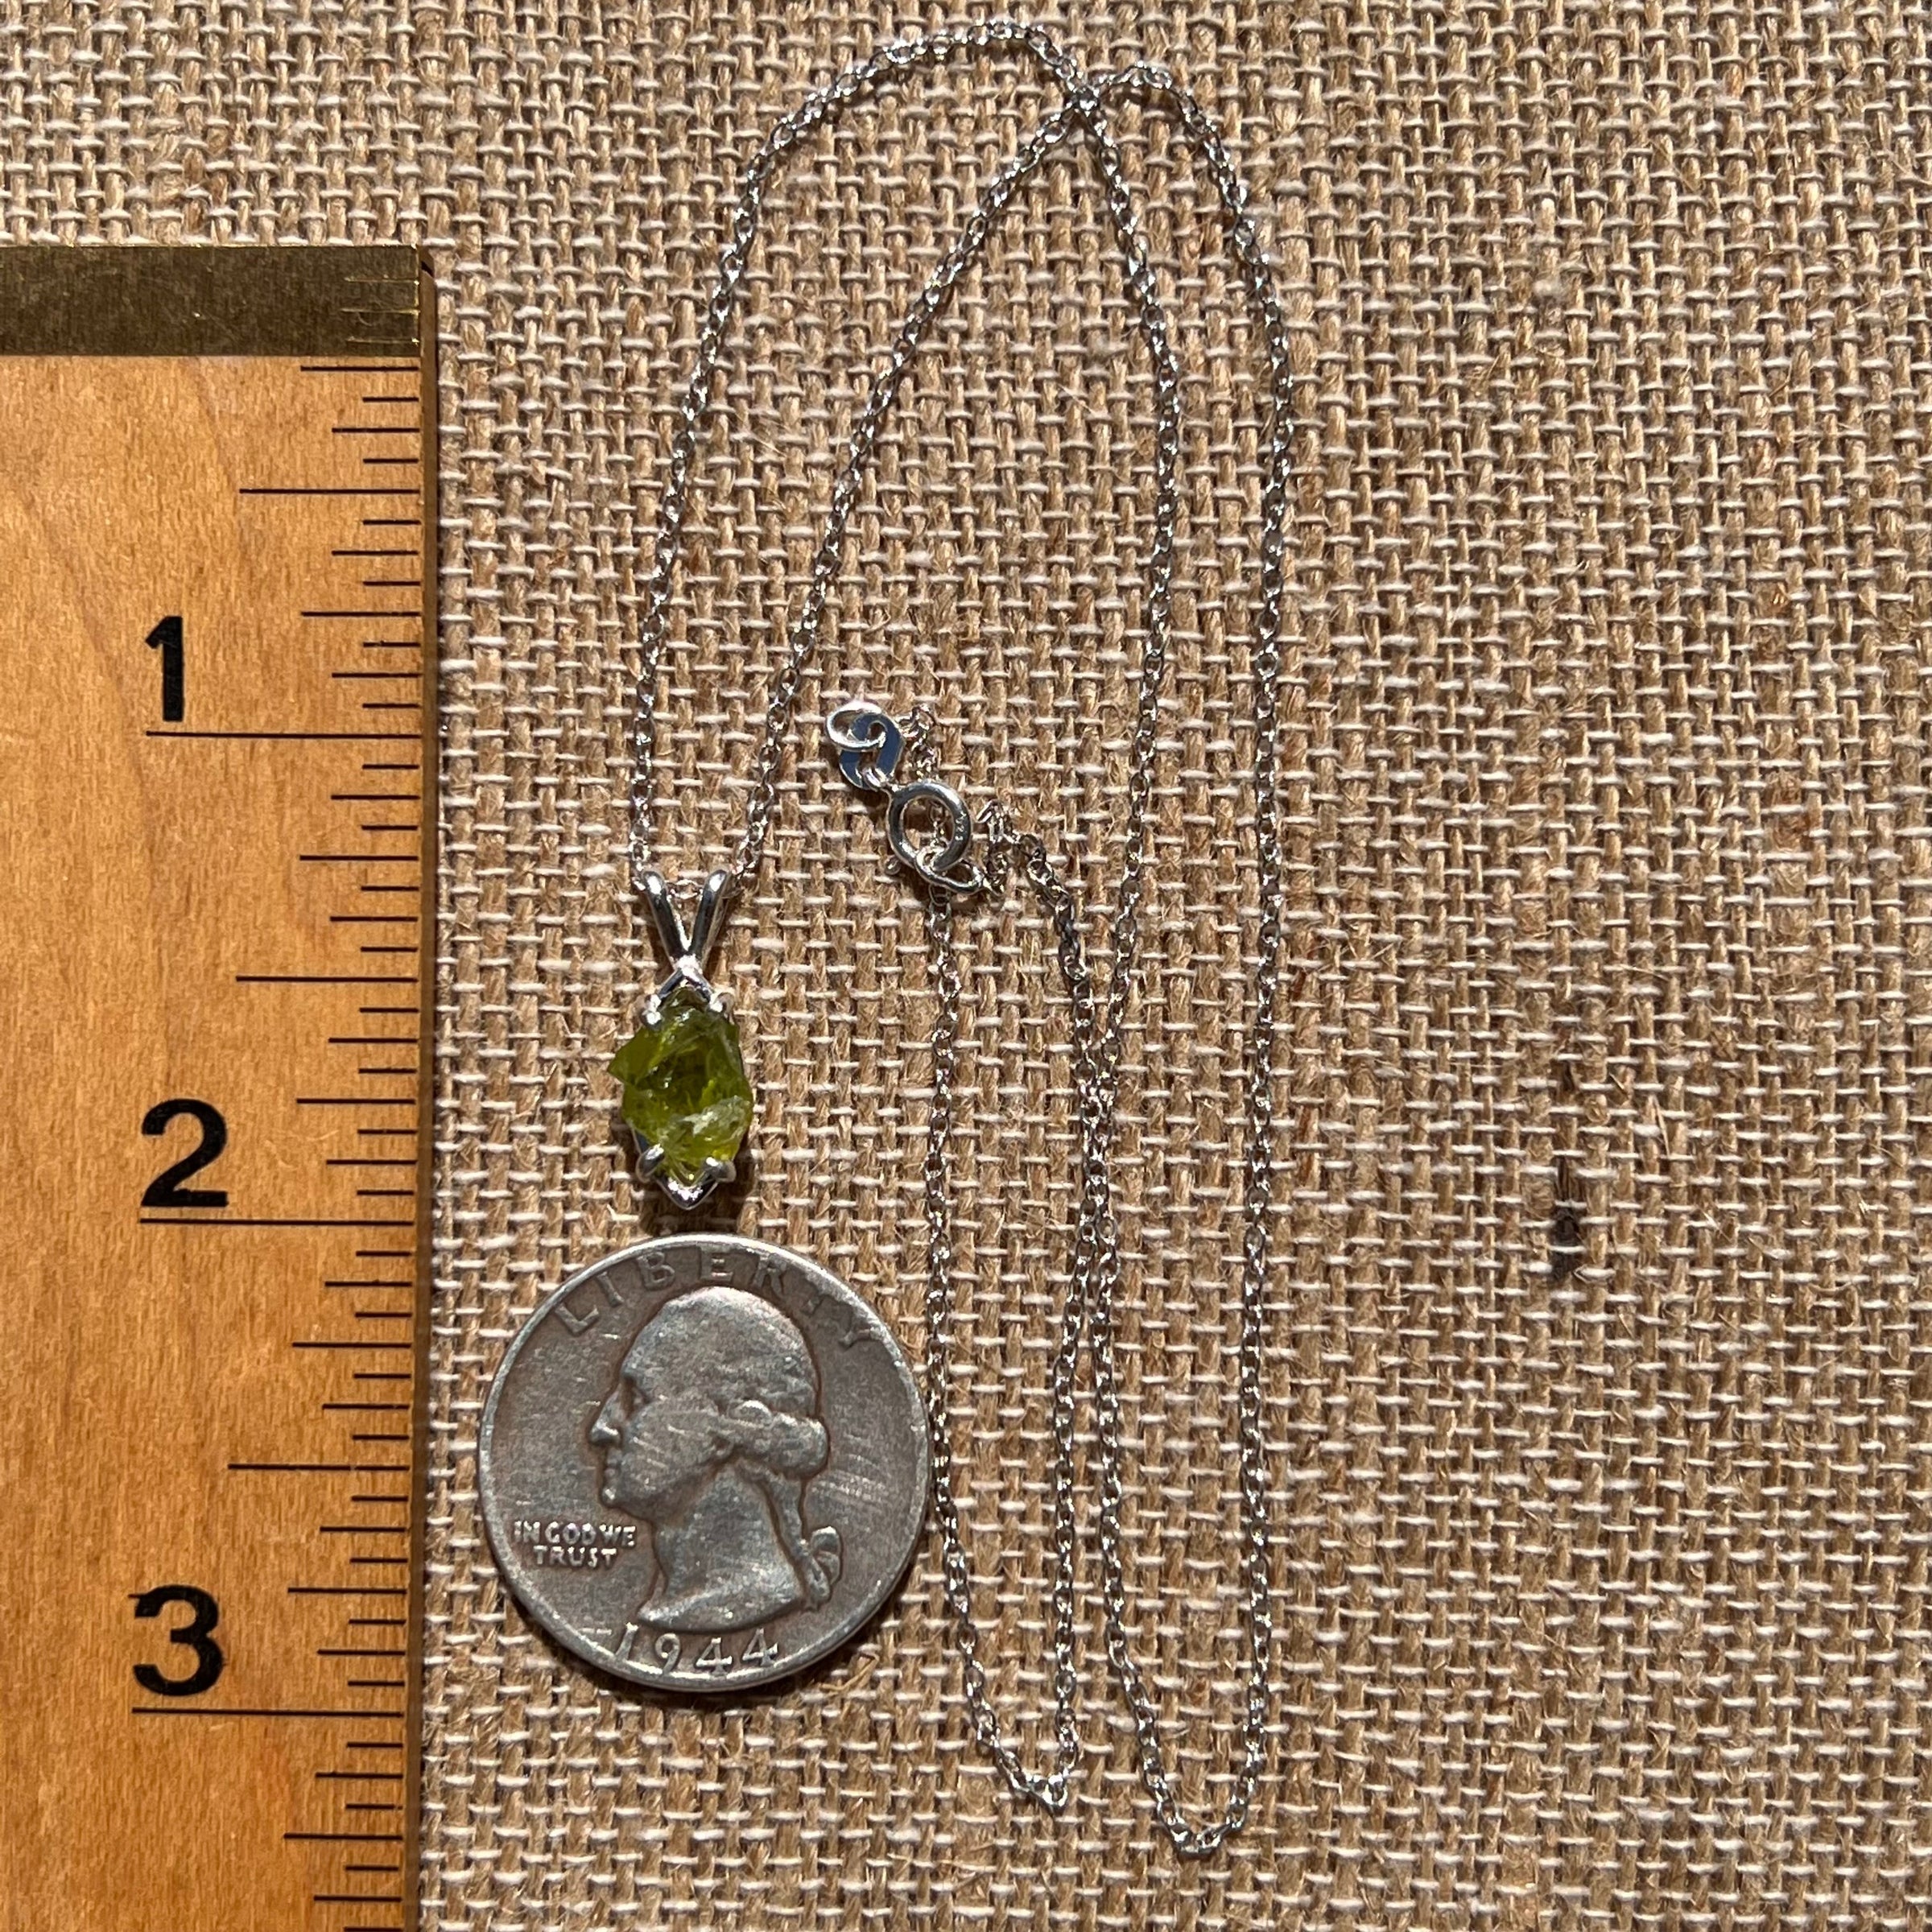 Raw Peridot Crystal Necklace Sterling Silver #2656-Moldavite Life